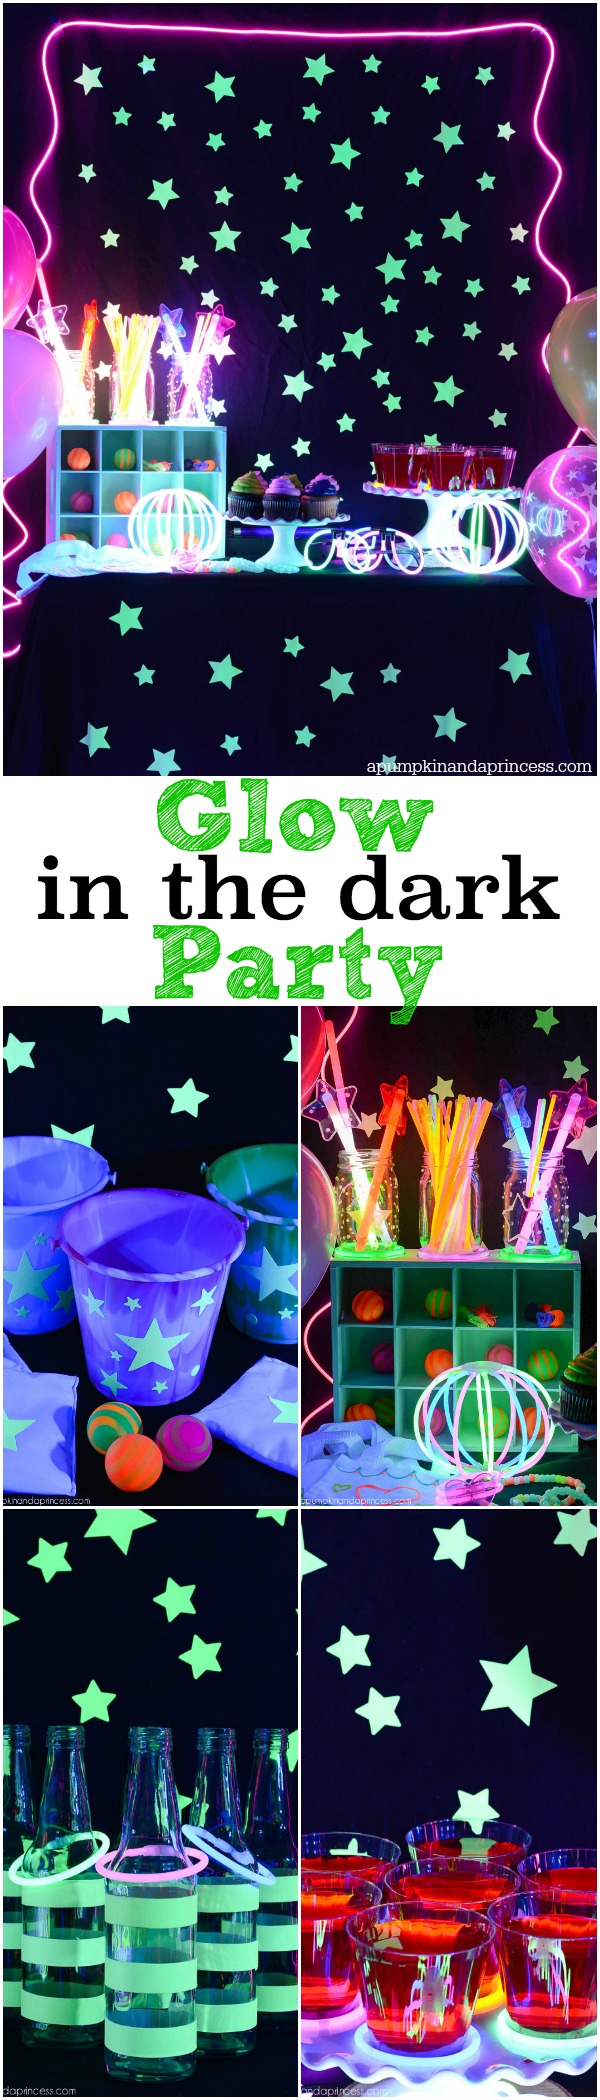 Glow in the dark party ideas